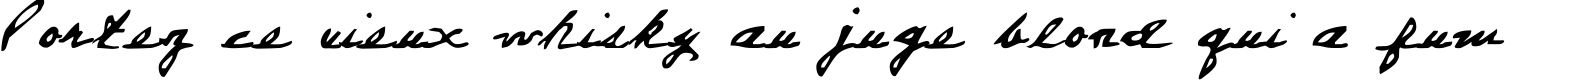 Пример написания шрифтом Everett Steele's Hand текста на французском